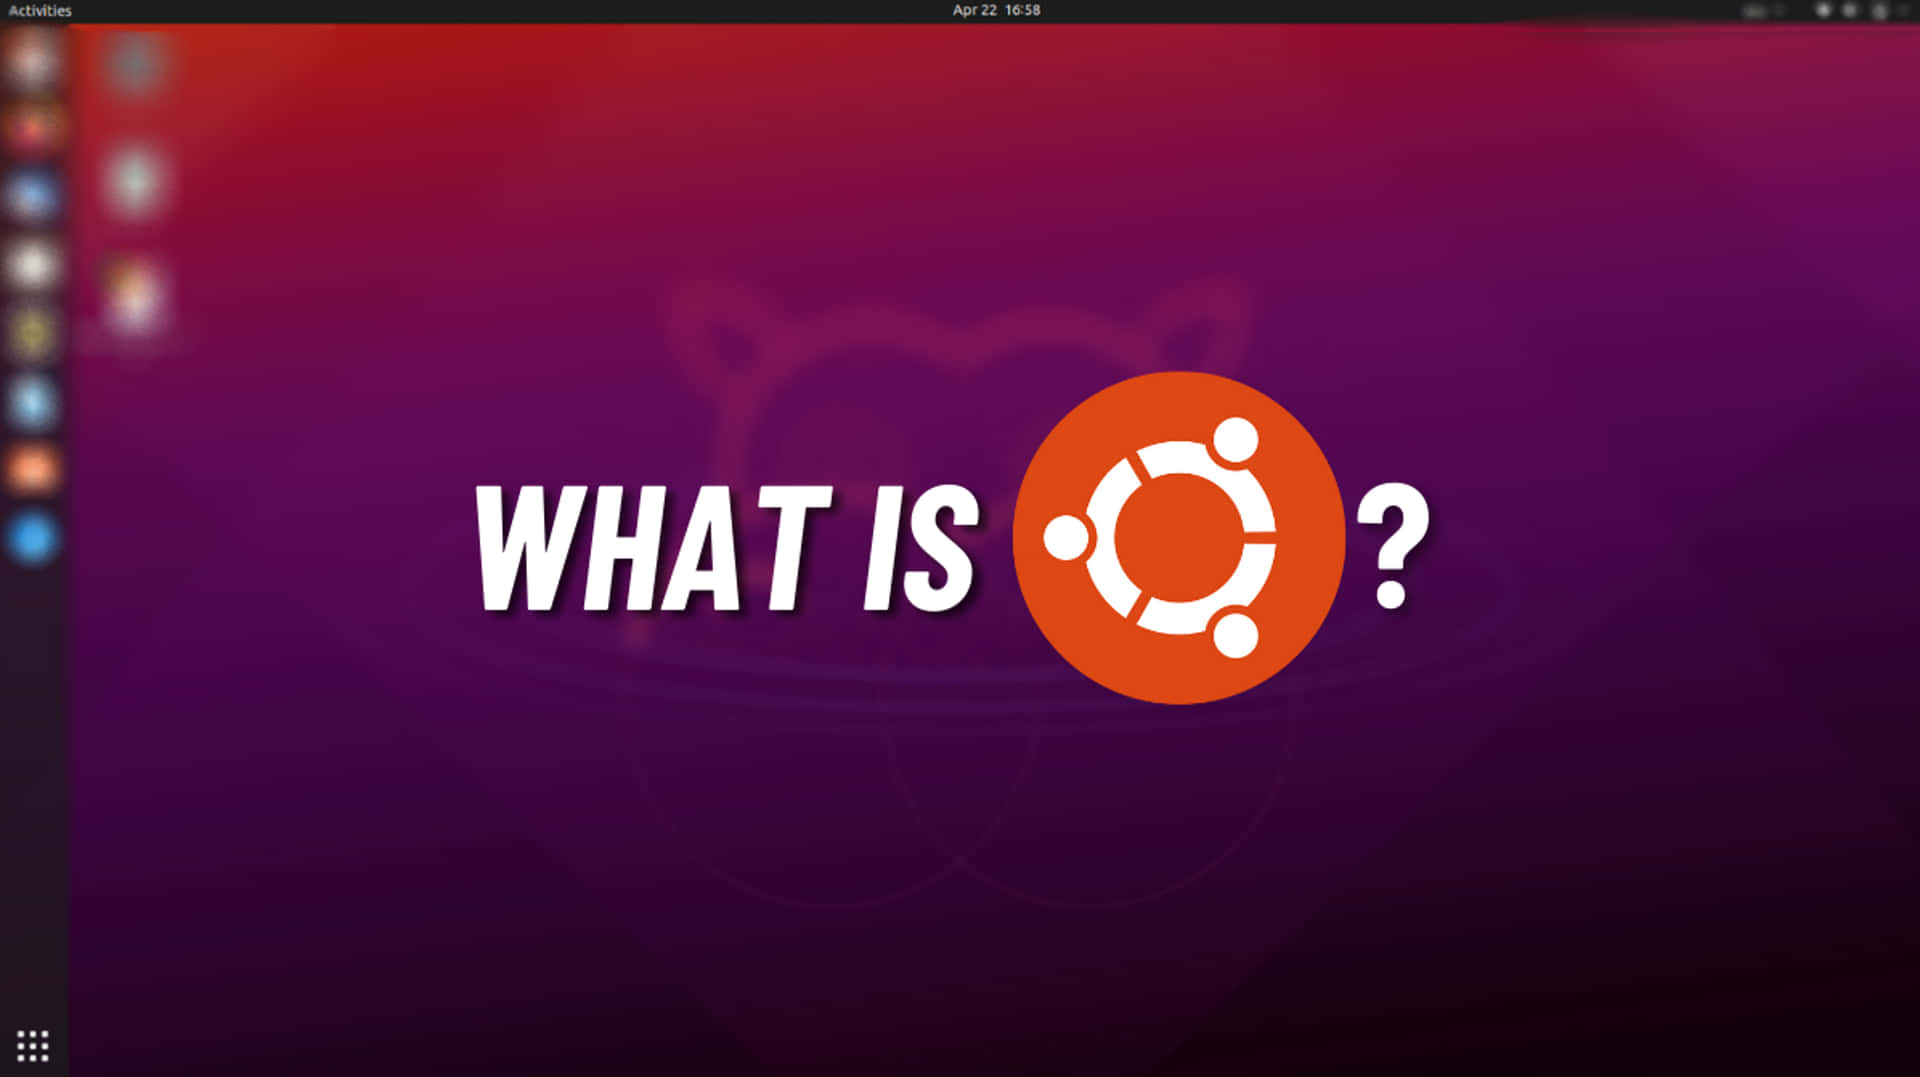 Benvenutoin Ubuntu, Il Tuo Sistema Operativo